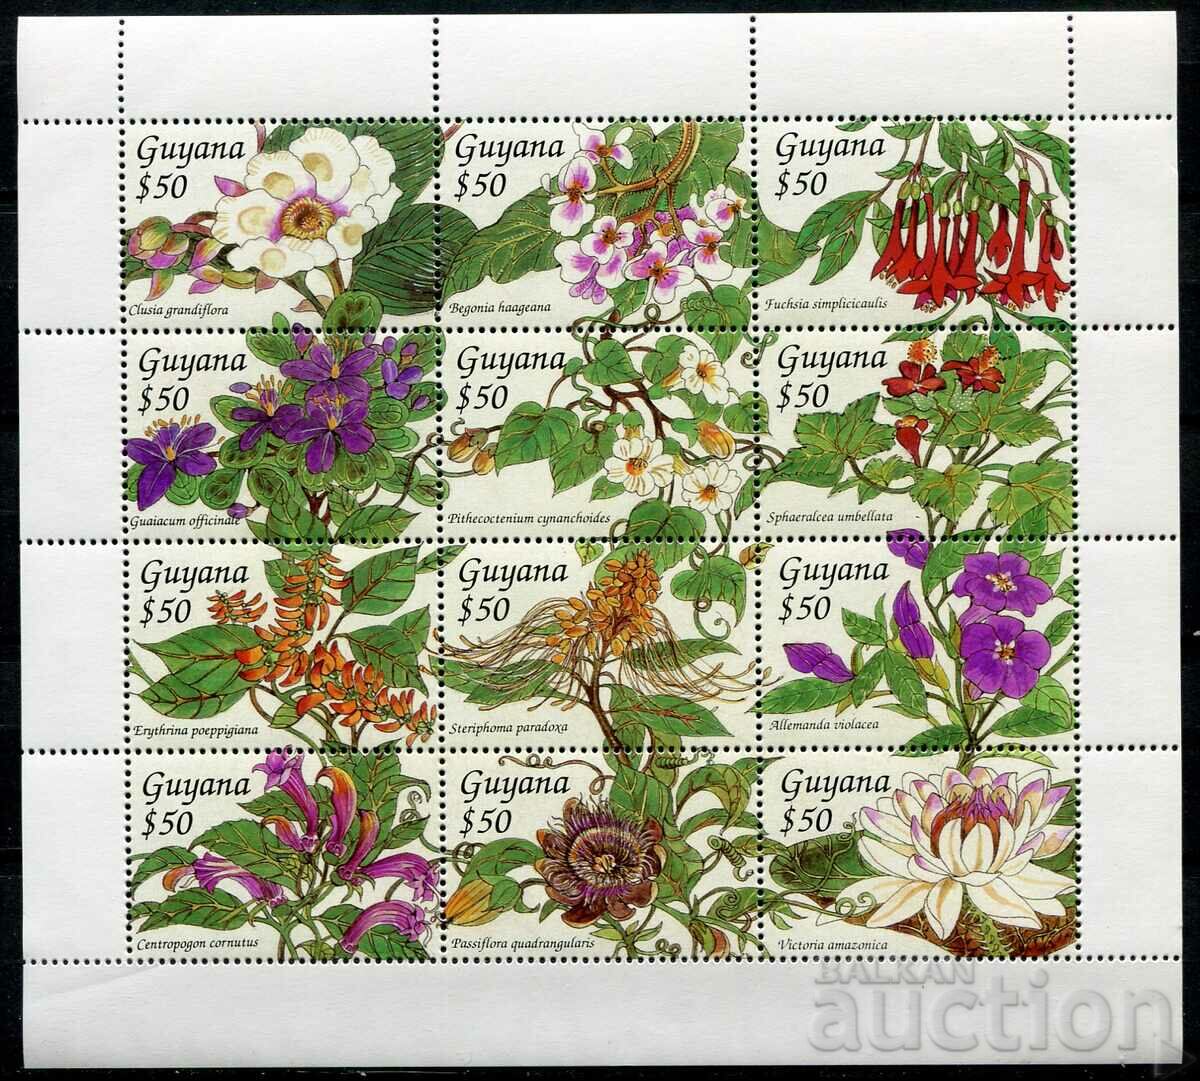 Guyana 1994 MnH - Flora, tropical flowers